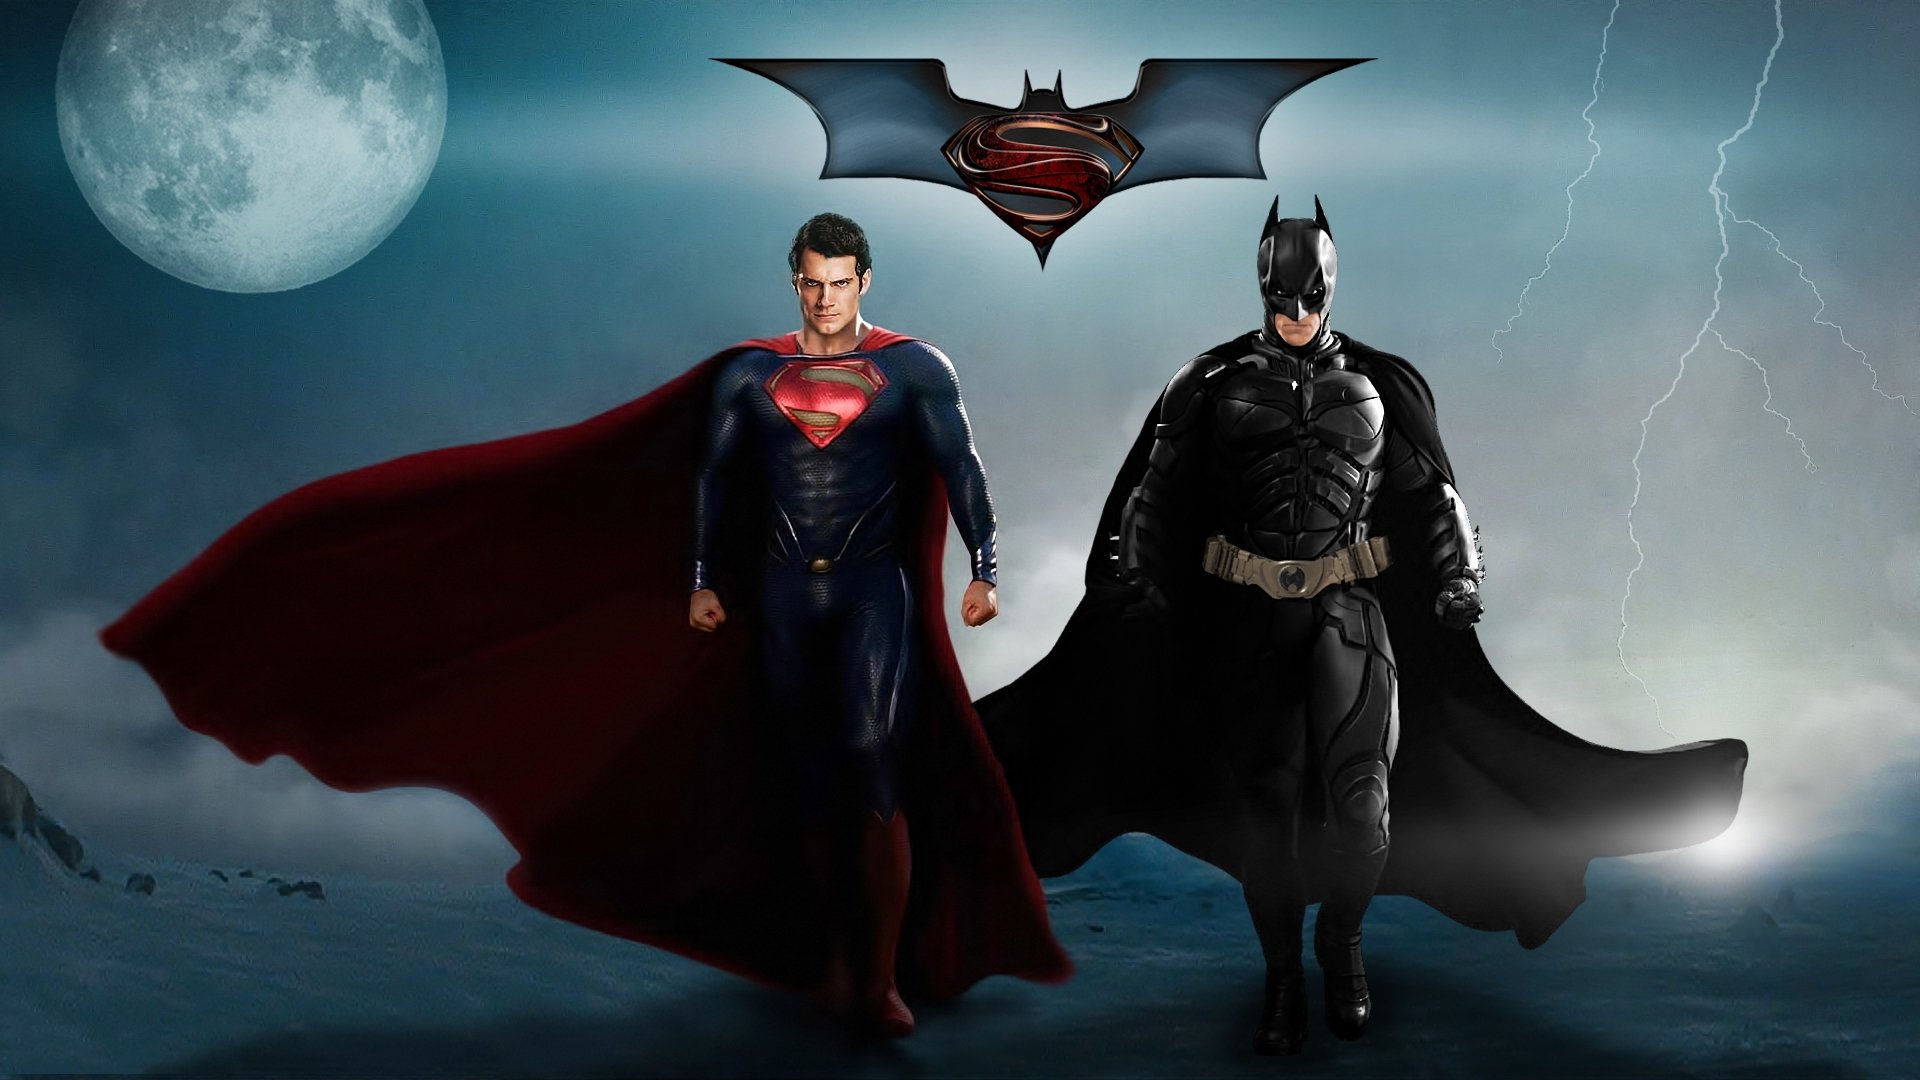  superman batman dark knight superhero dawn justice 25 wallpaper